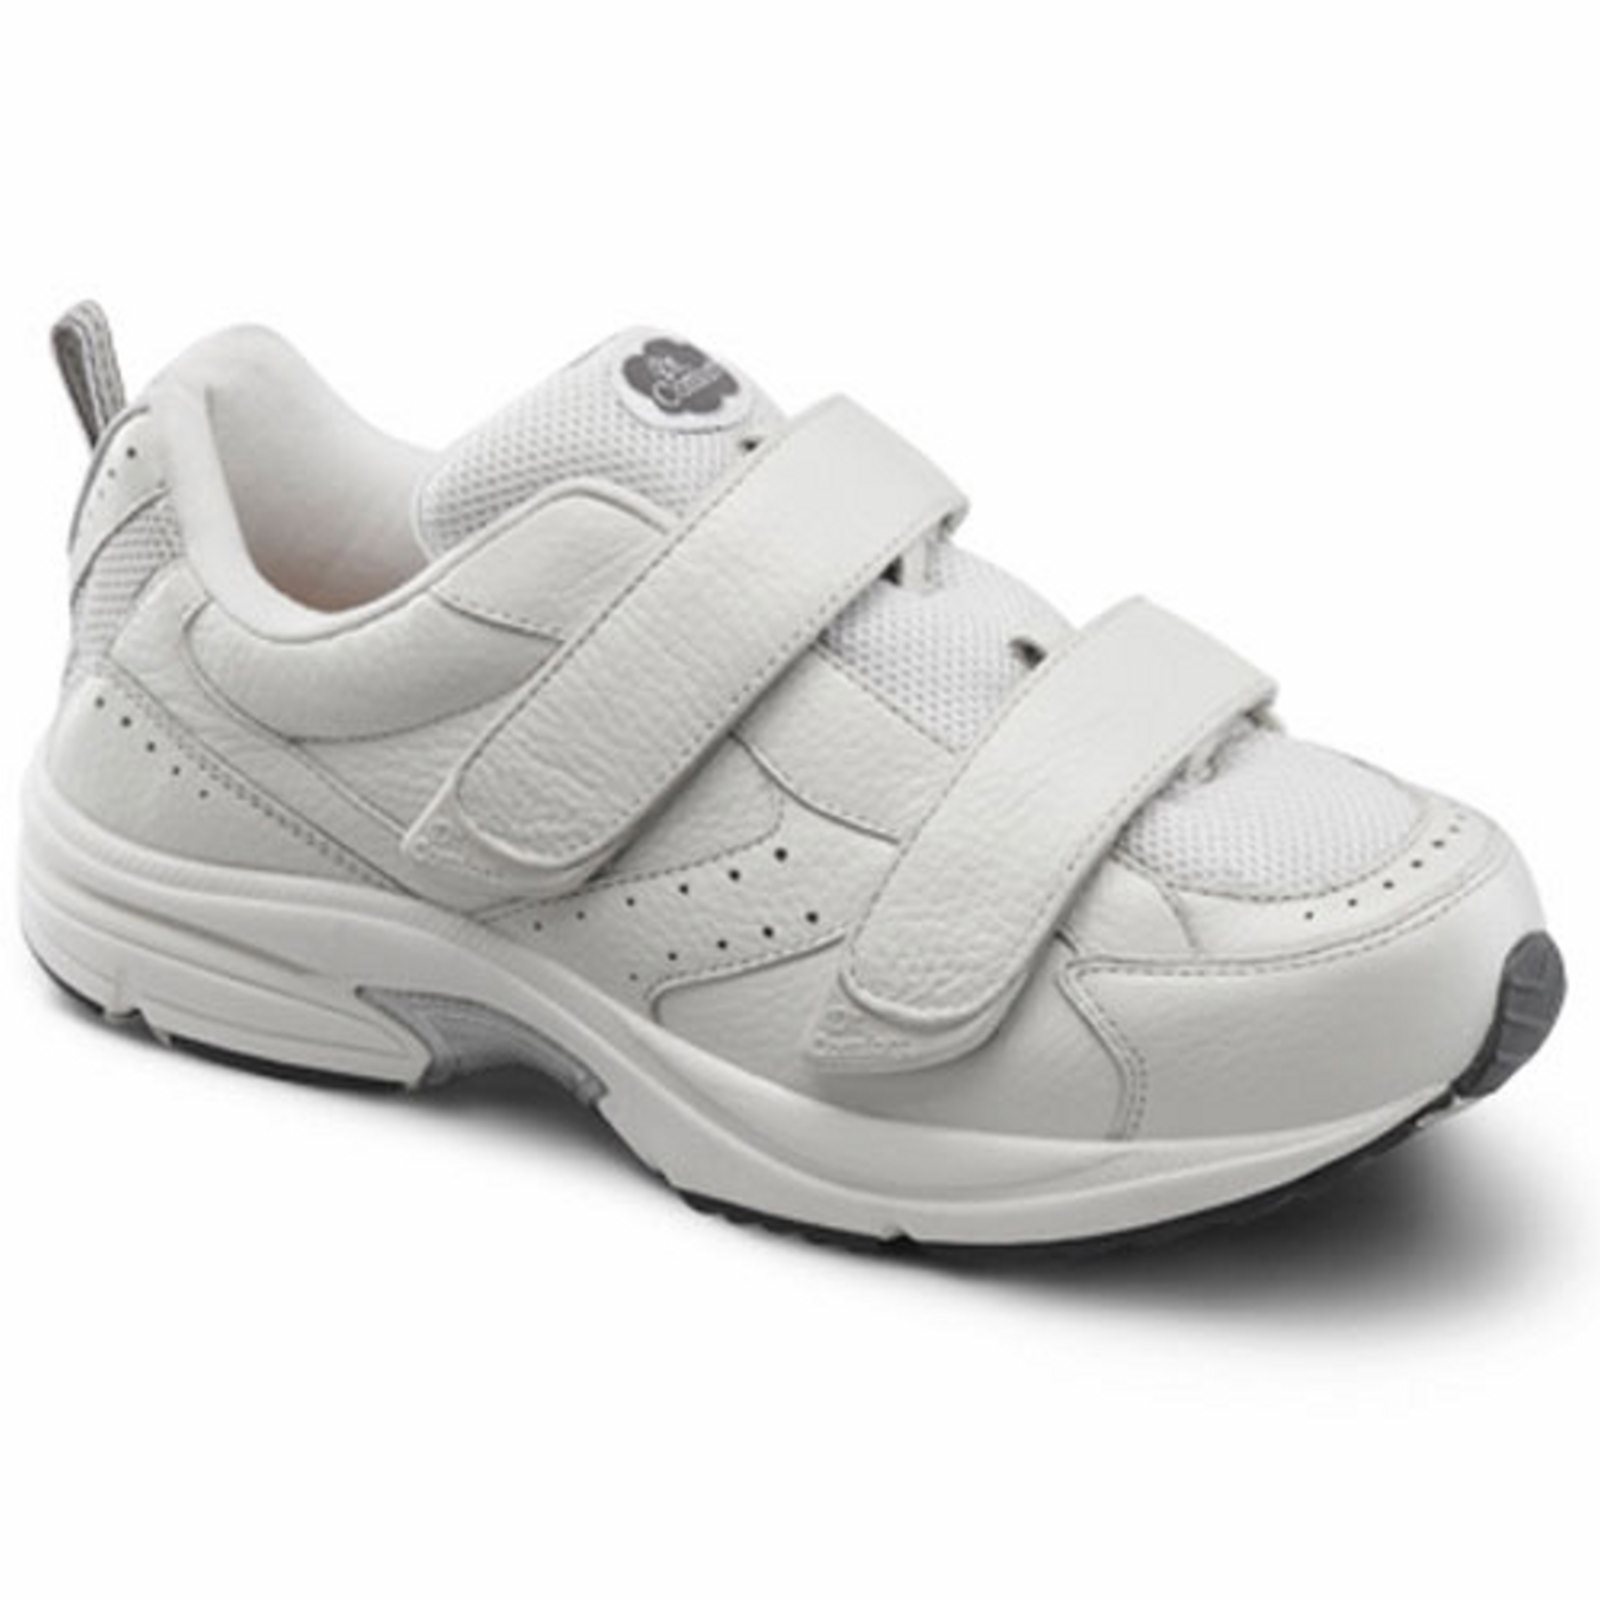 Dr Comfort Champion-X Men's Therapeutic Diabetic Athletic Shoe | eBay